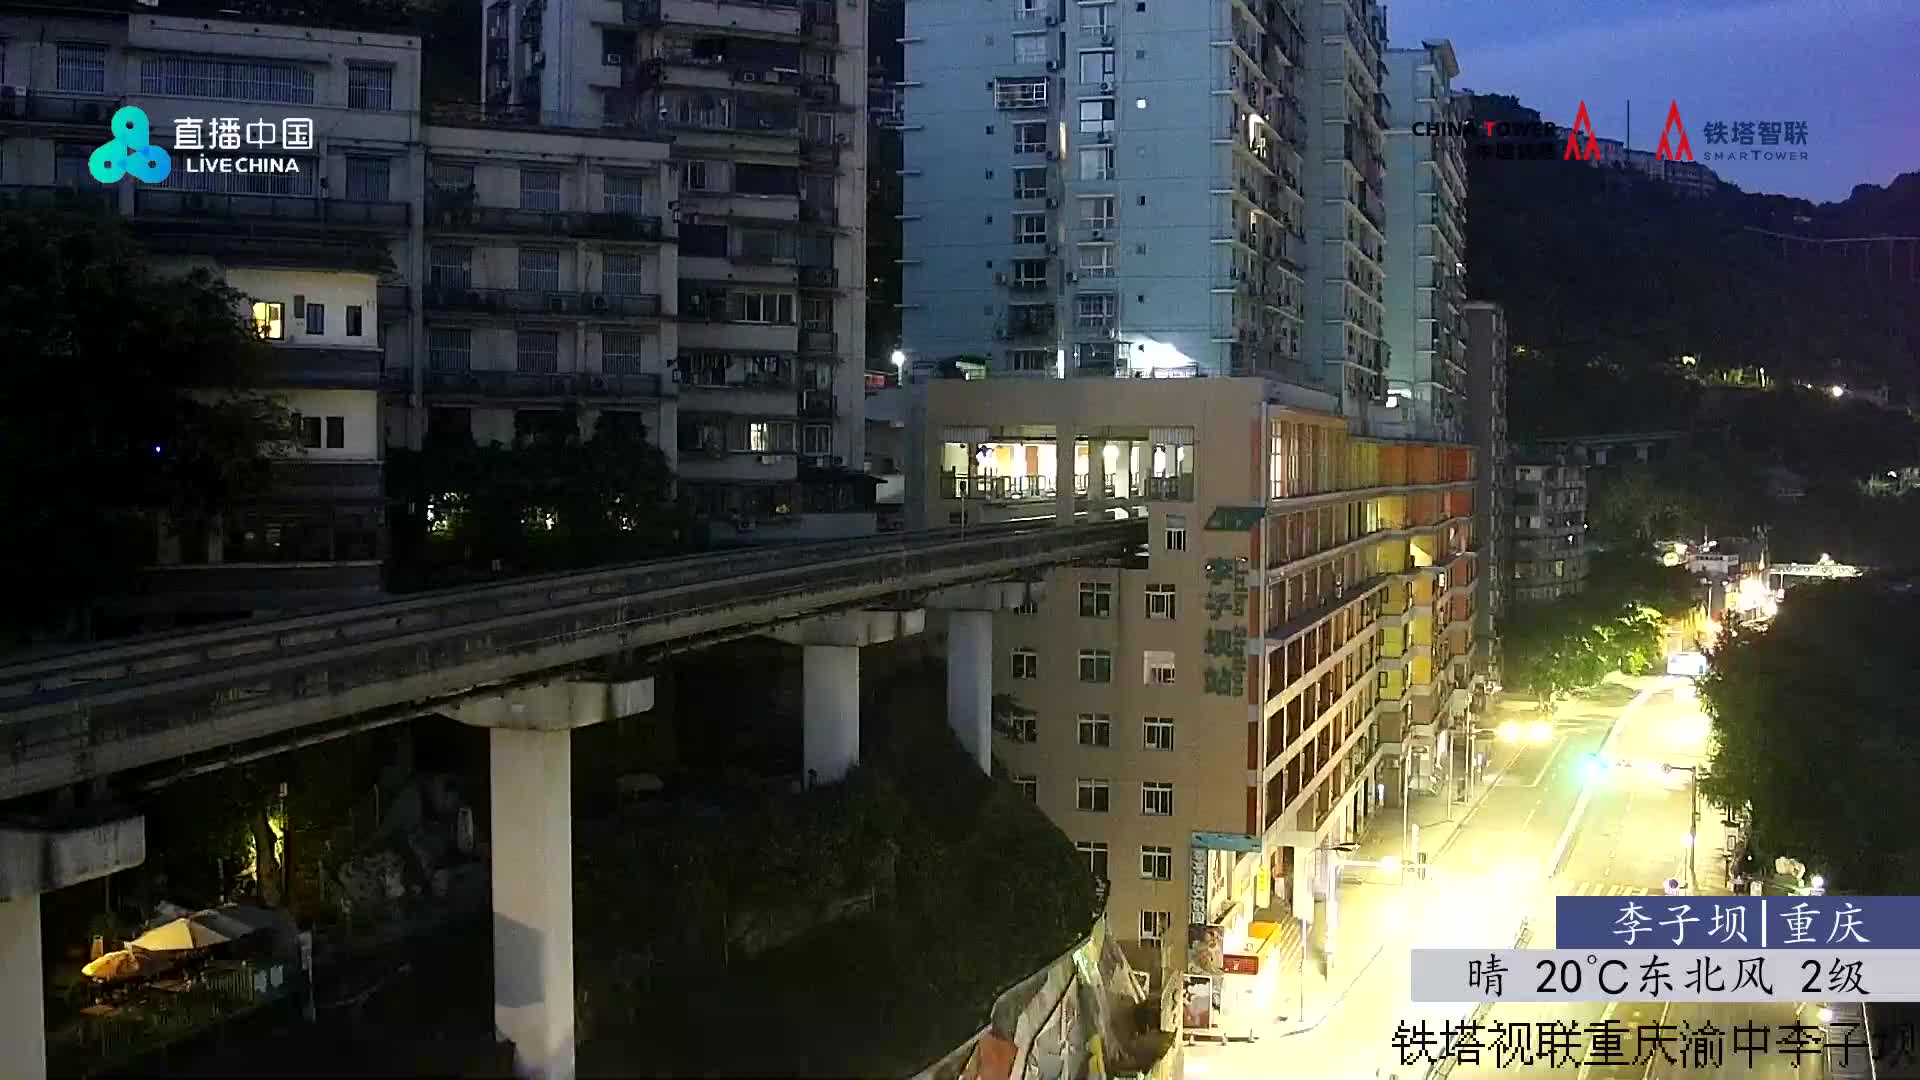 Chongqing Man. 05:32